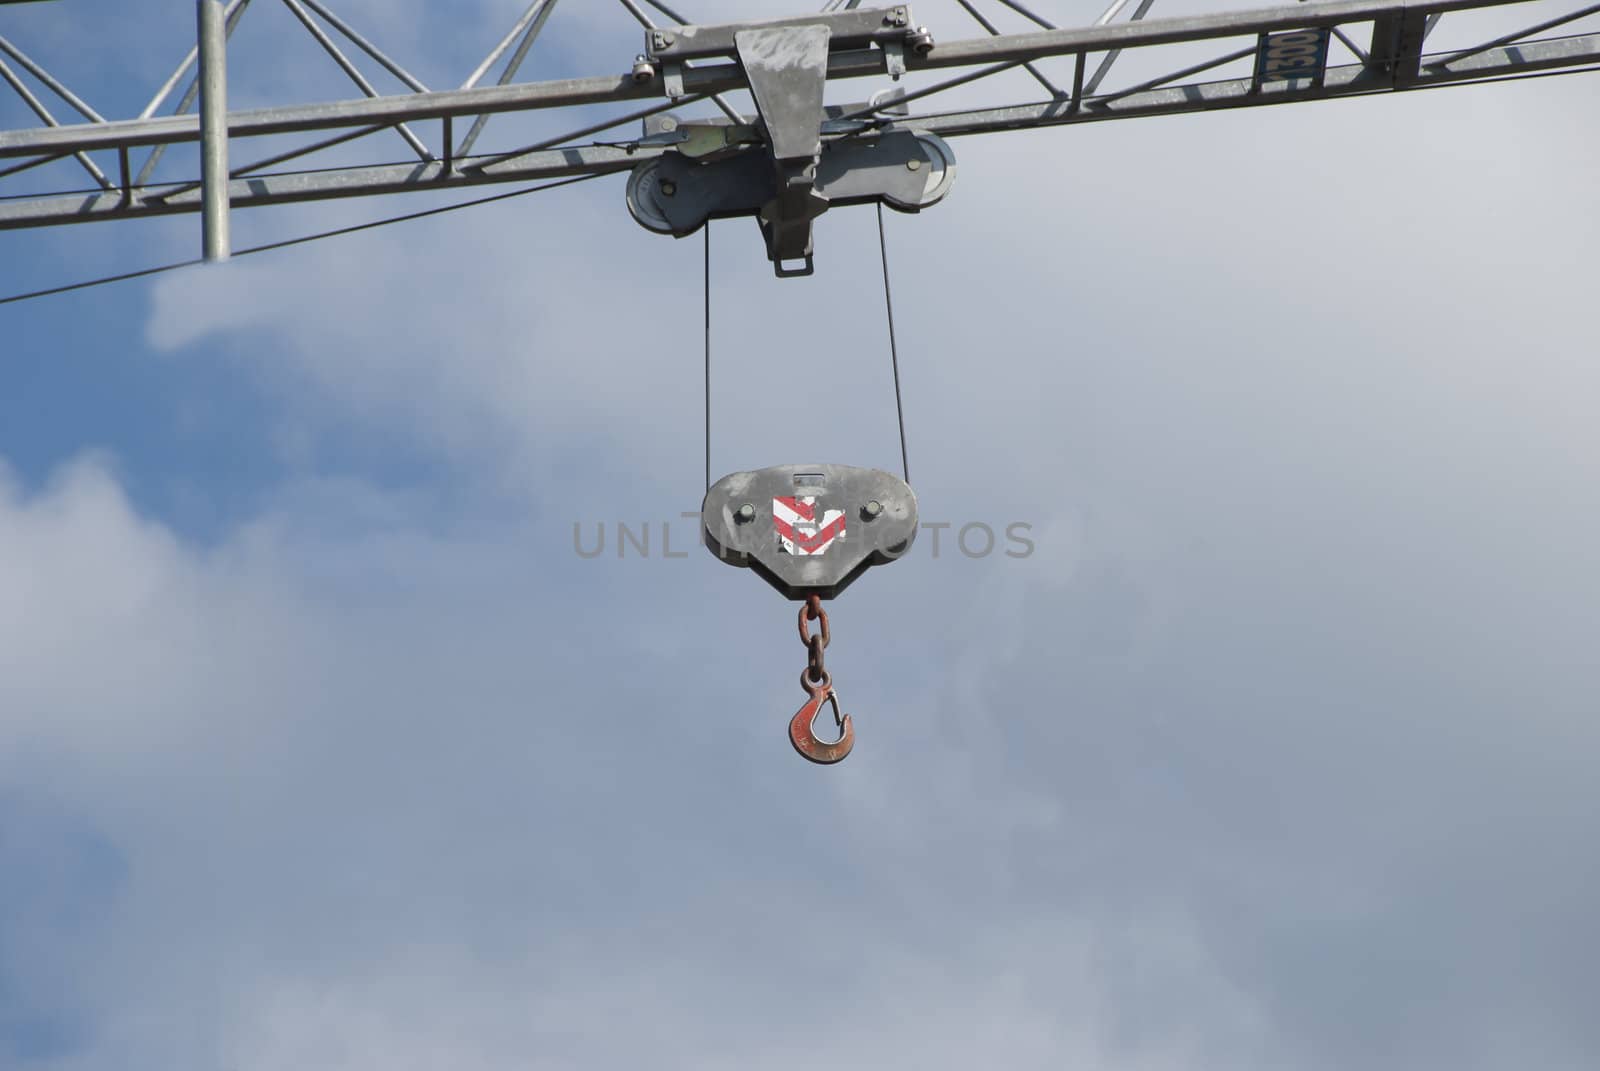 A Construction Crane Hook against a cloudy sky